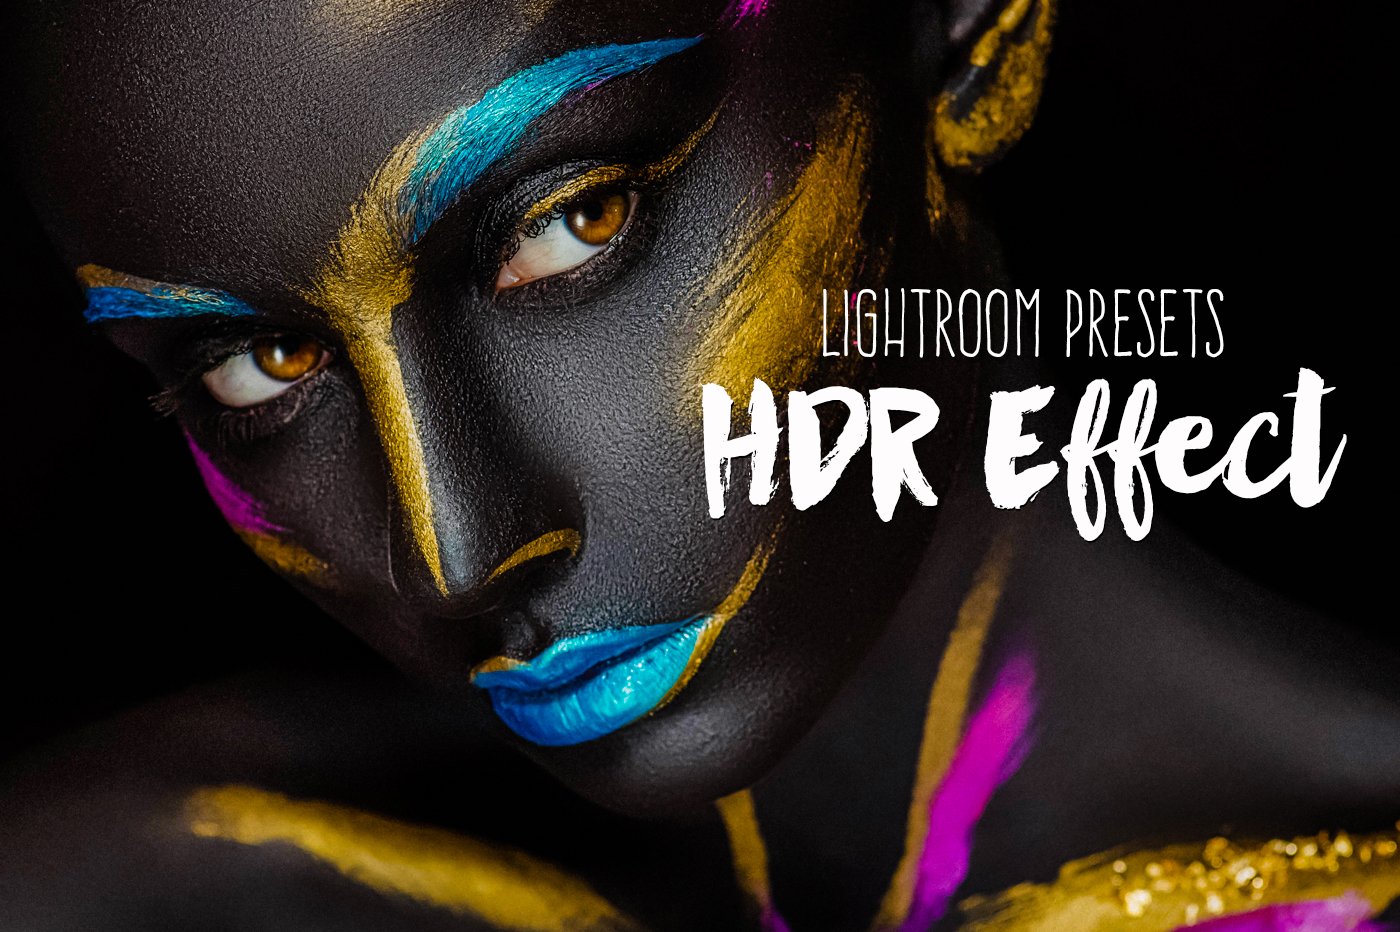 HDR Premium Lightroom presetscover image.